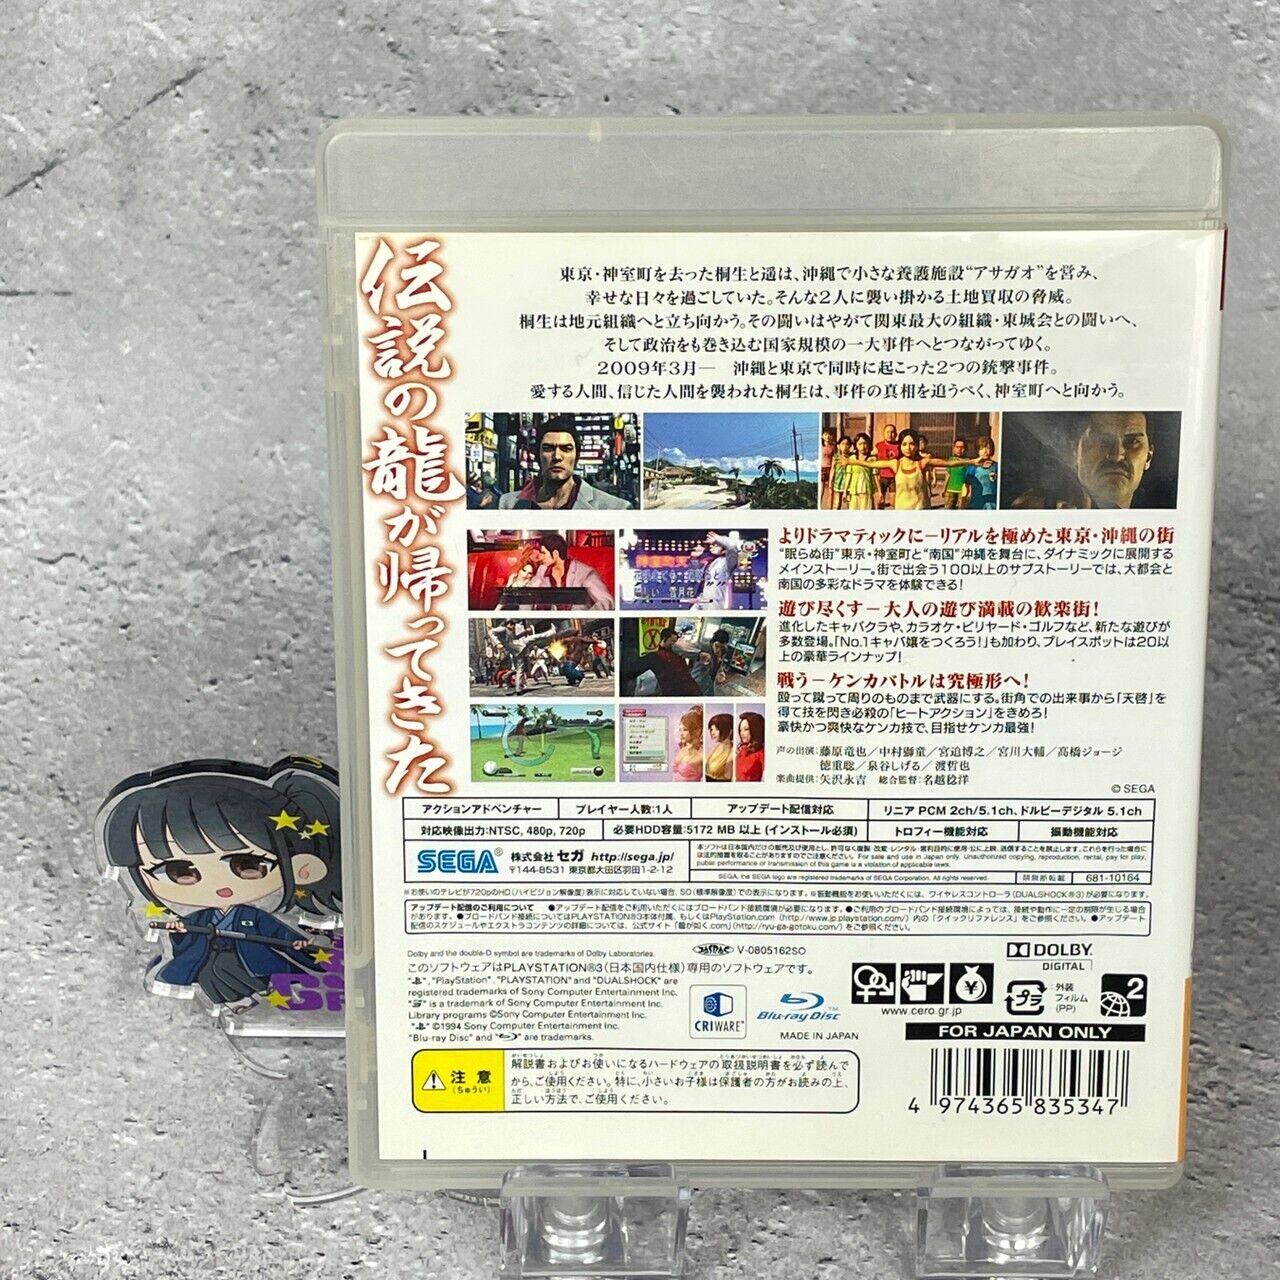 PS3 Ryu Ga Gotoku YAKUZA Series Japanese Language Edition SegaGame Kiryuu Kazuma